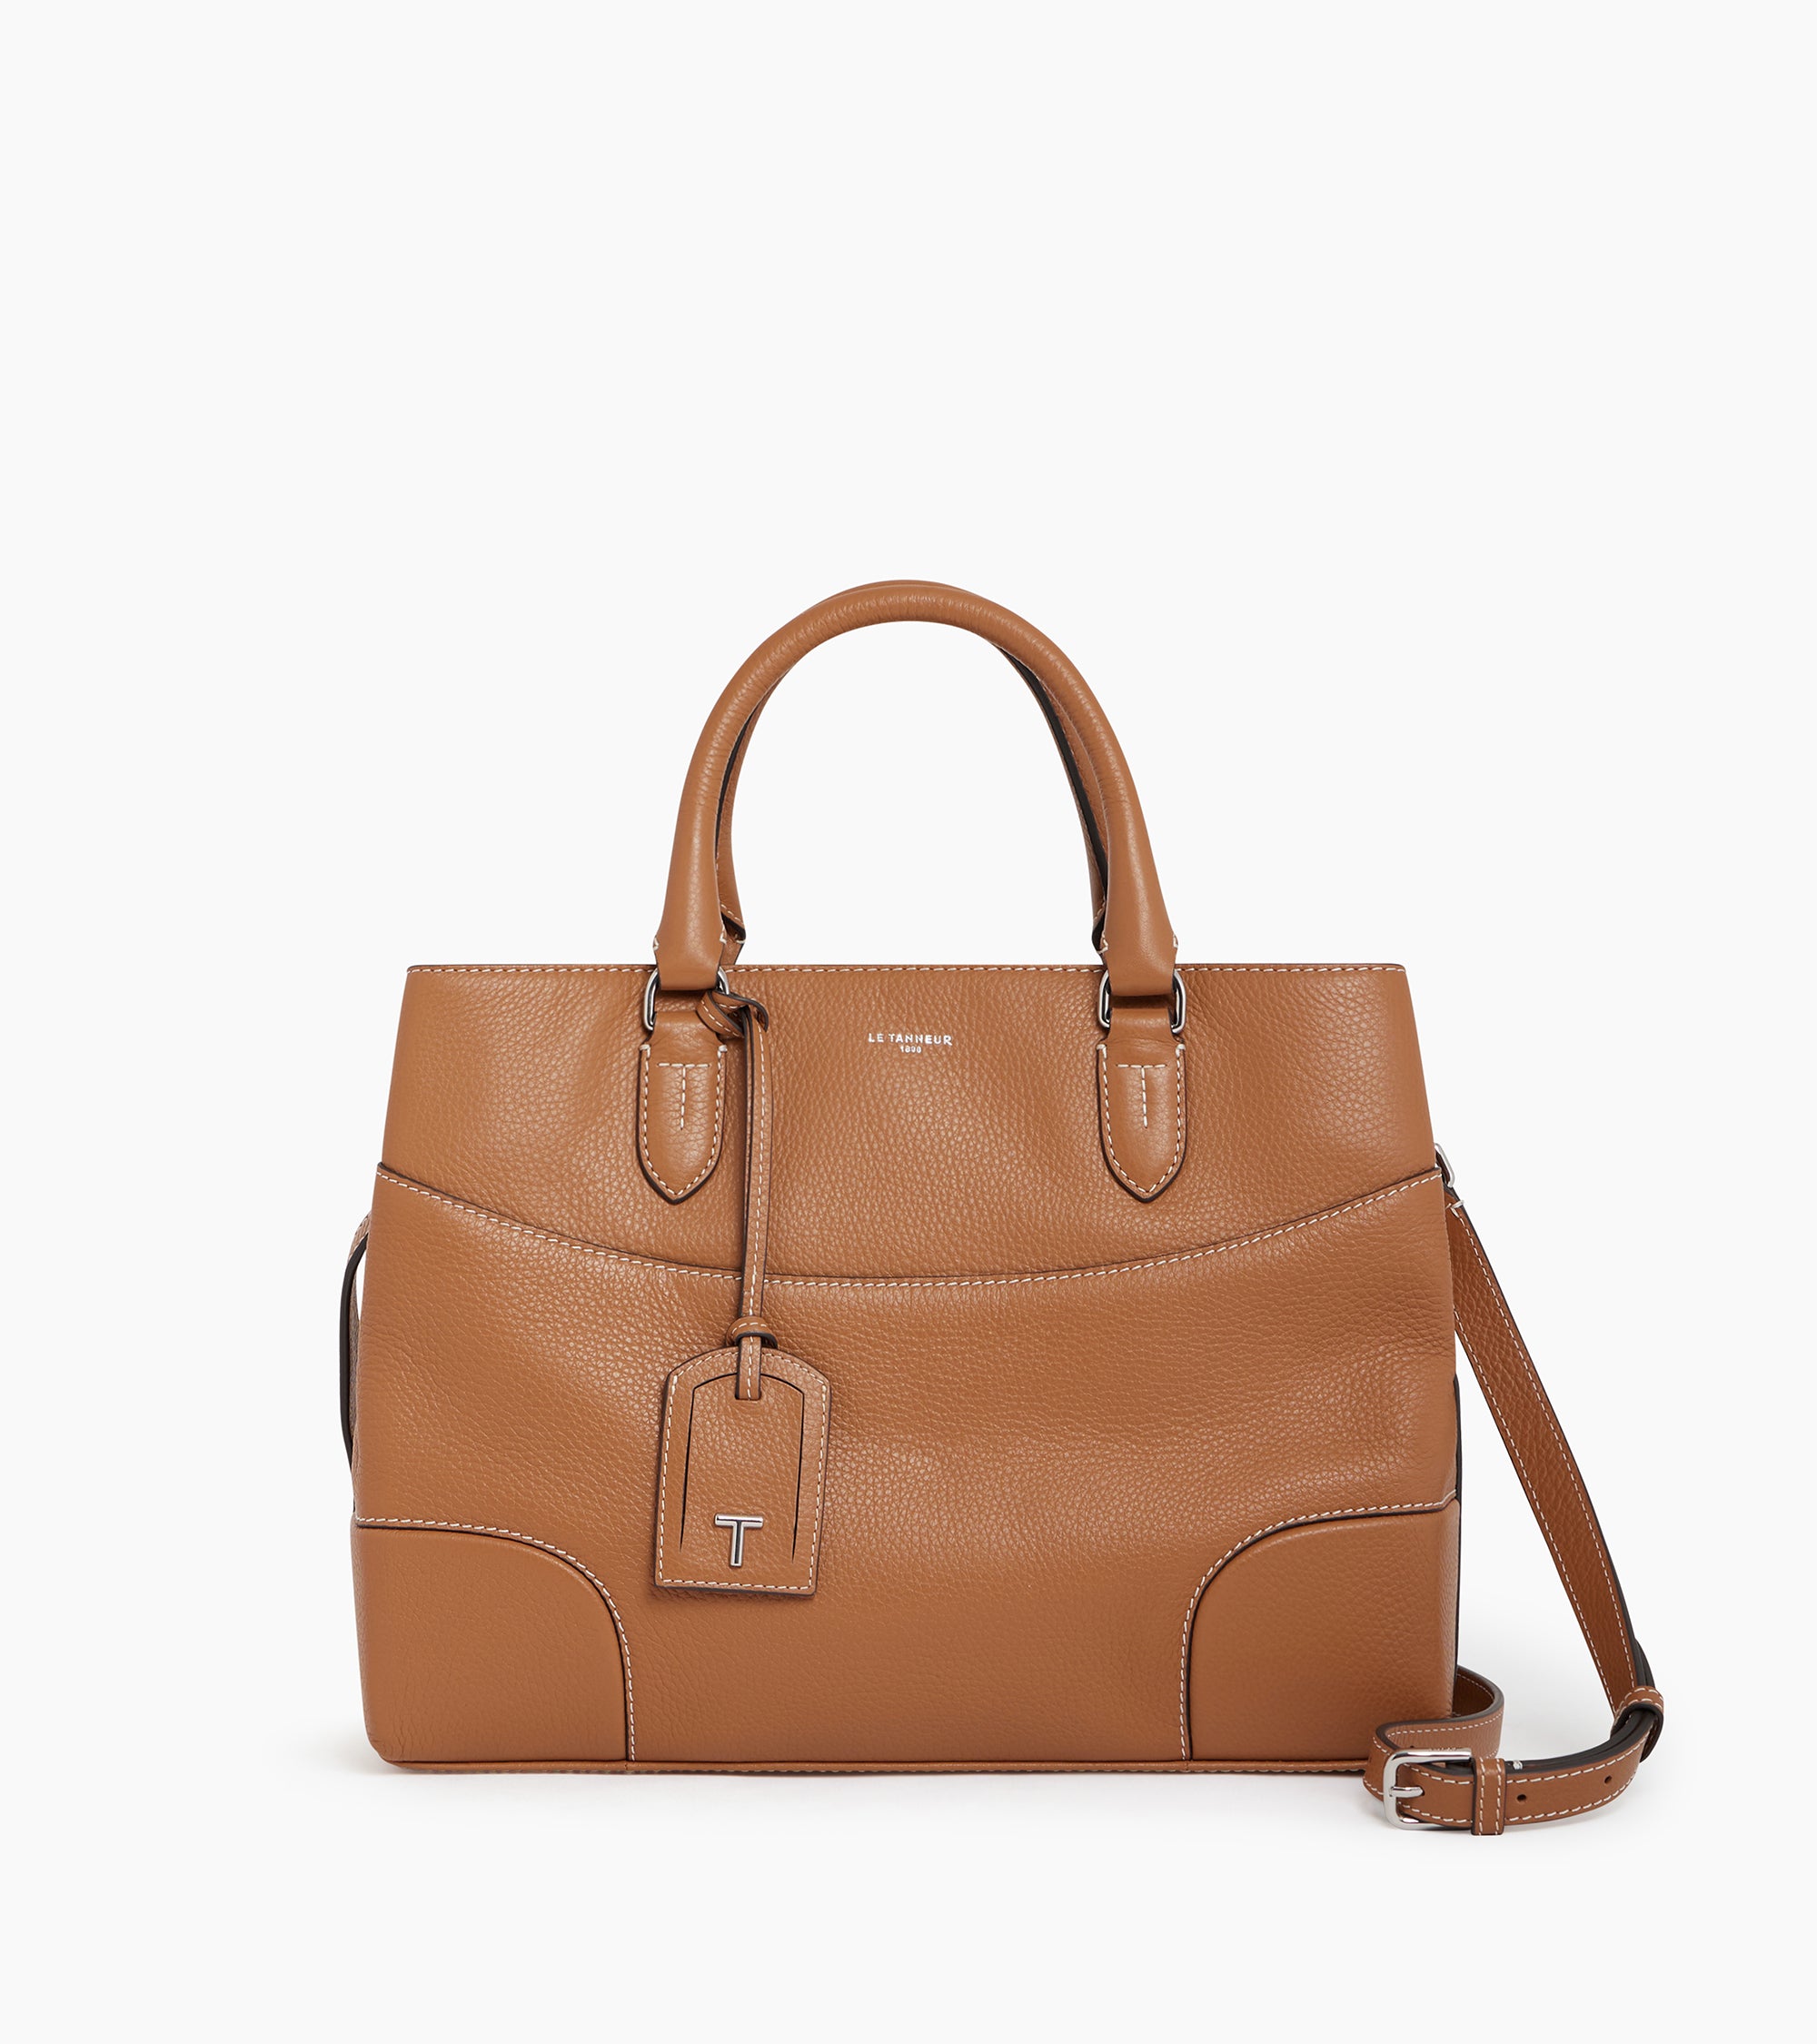 Romy large handbag in pebbled leather